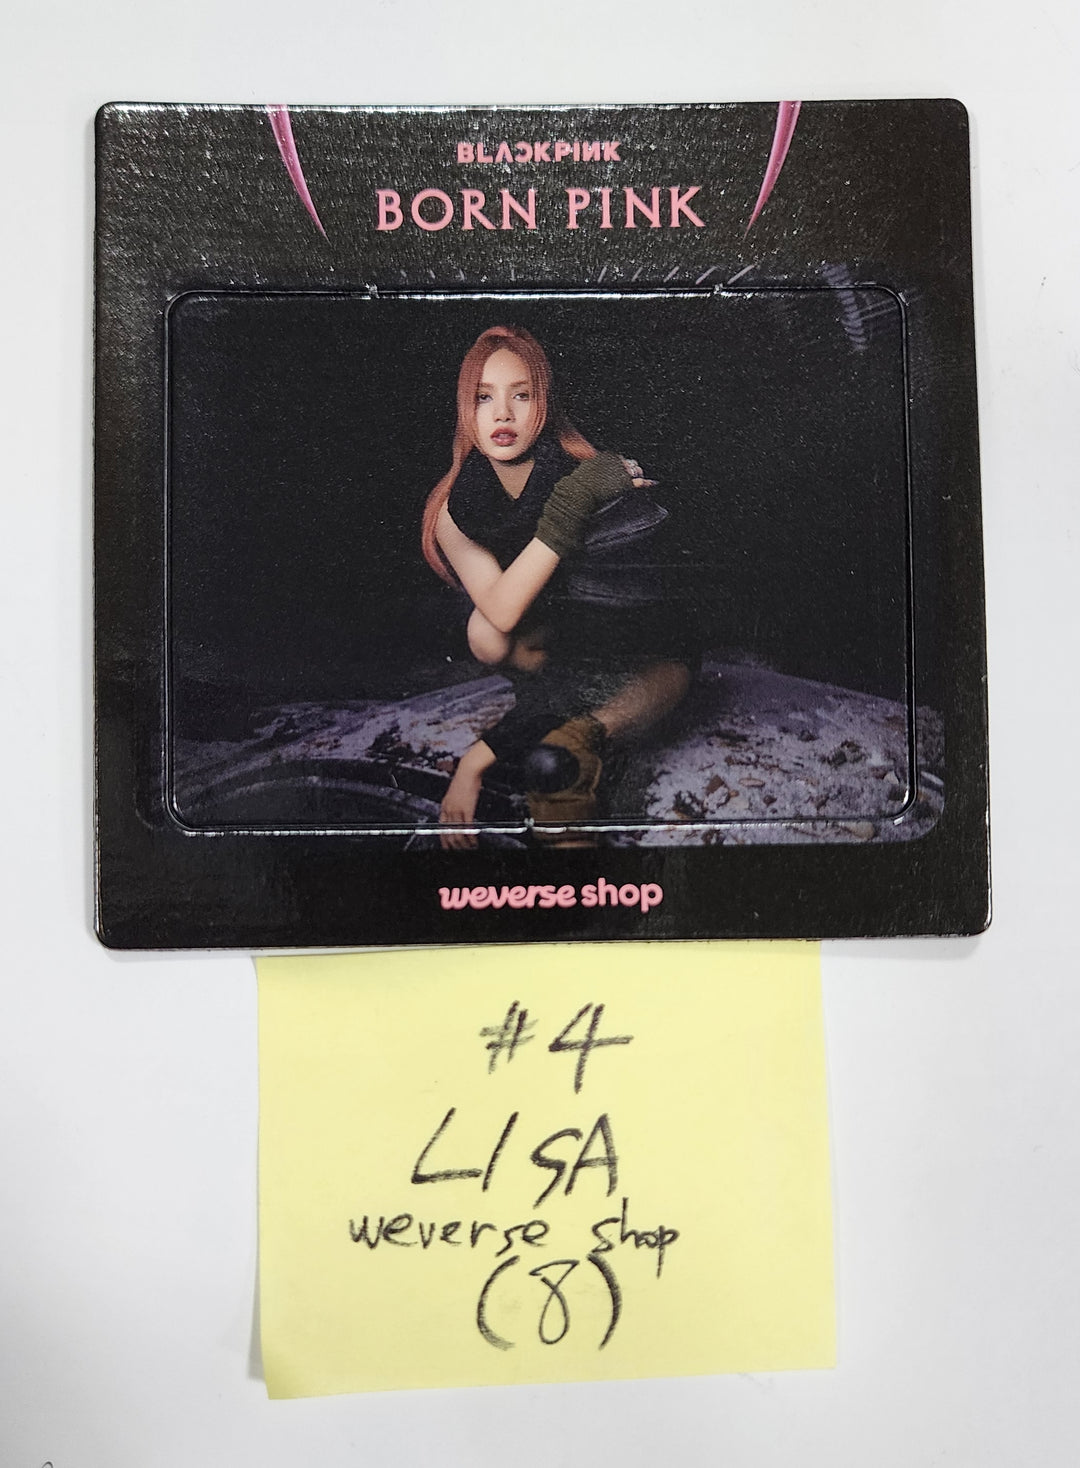 BLACK PINK "Born Pink" - 위버스샵 예약판매 혜택 포토카드, 마그넷 포토카드, 렌티큘러 엽서